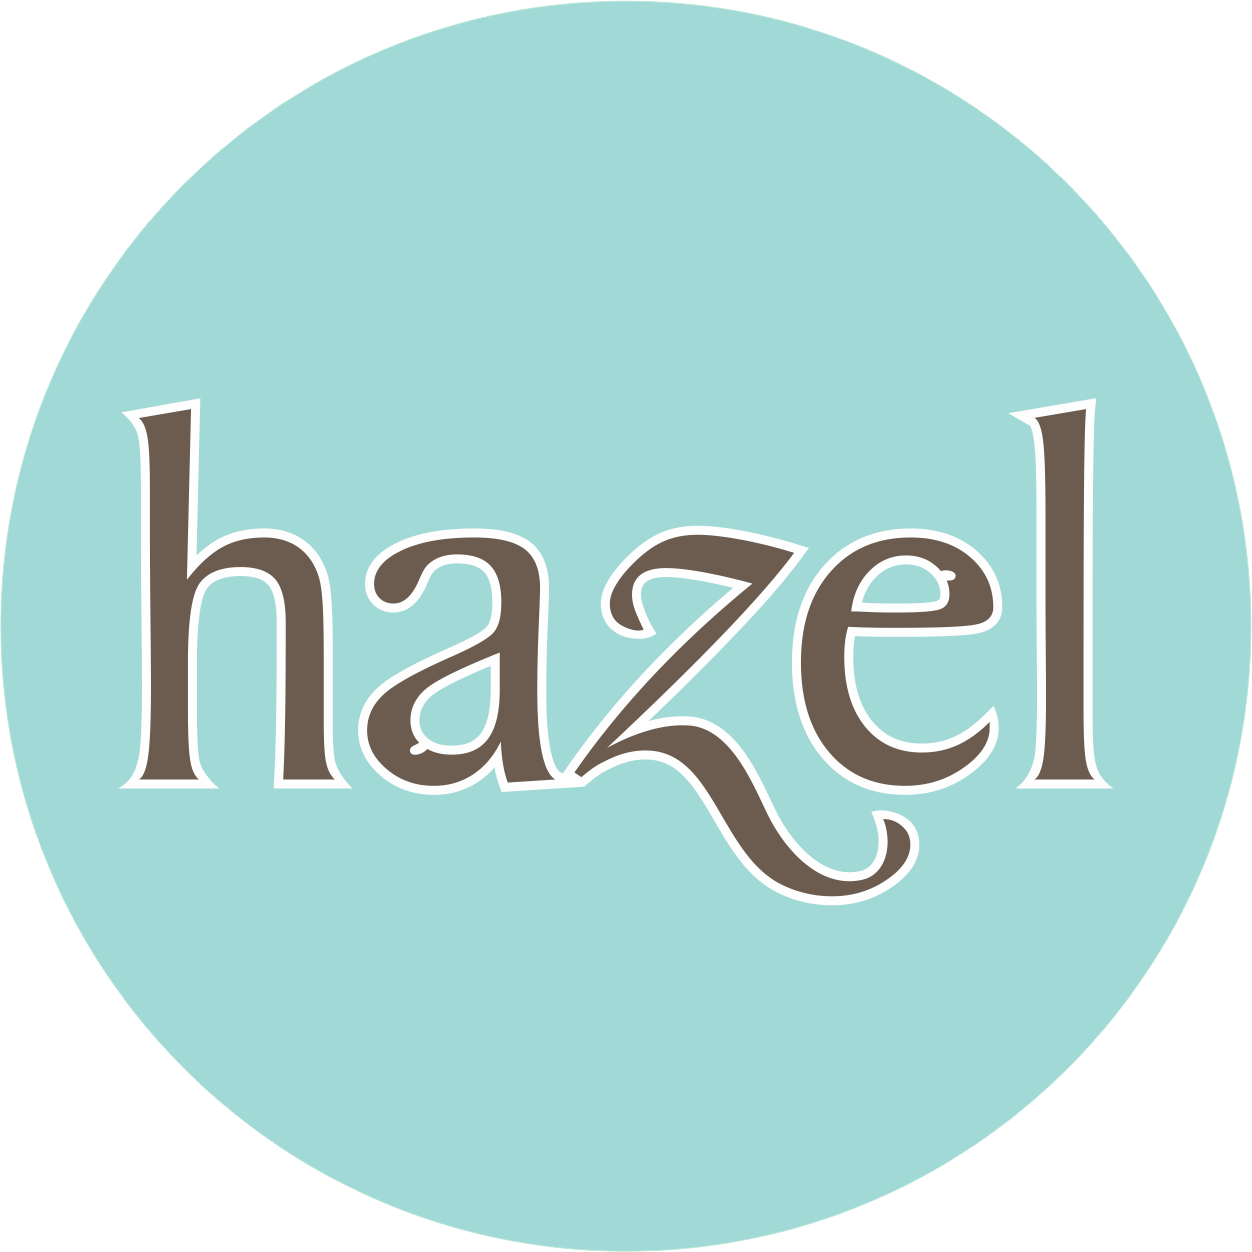 Who is Hazel?